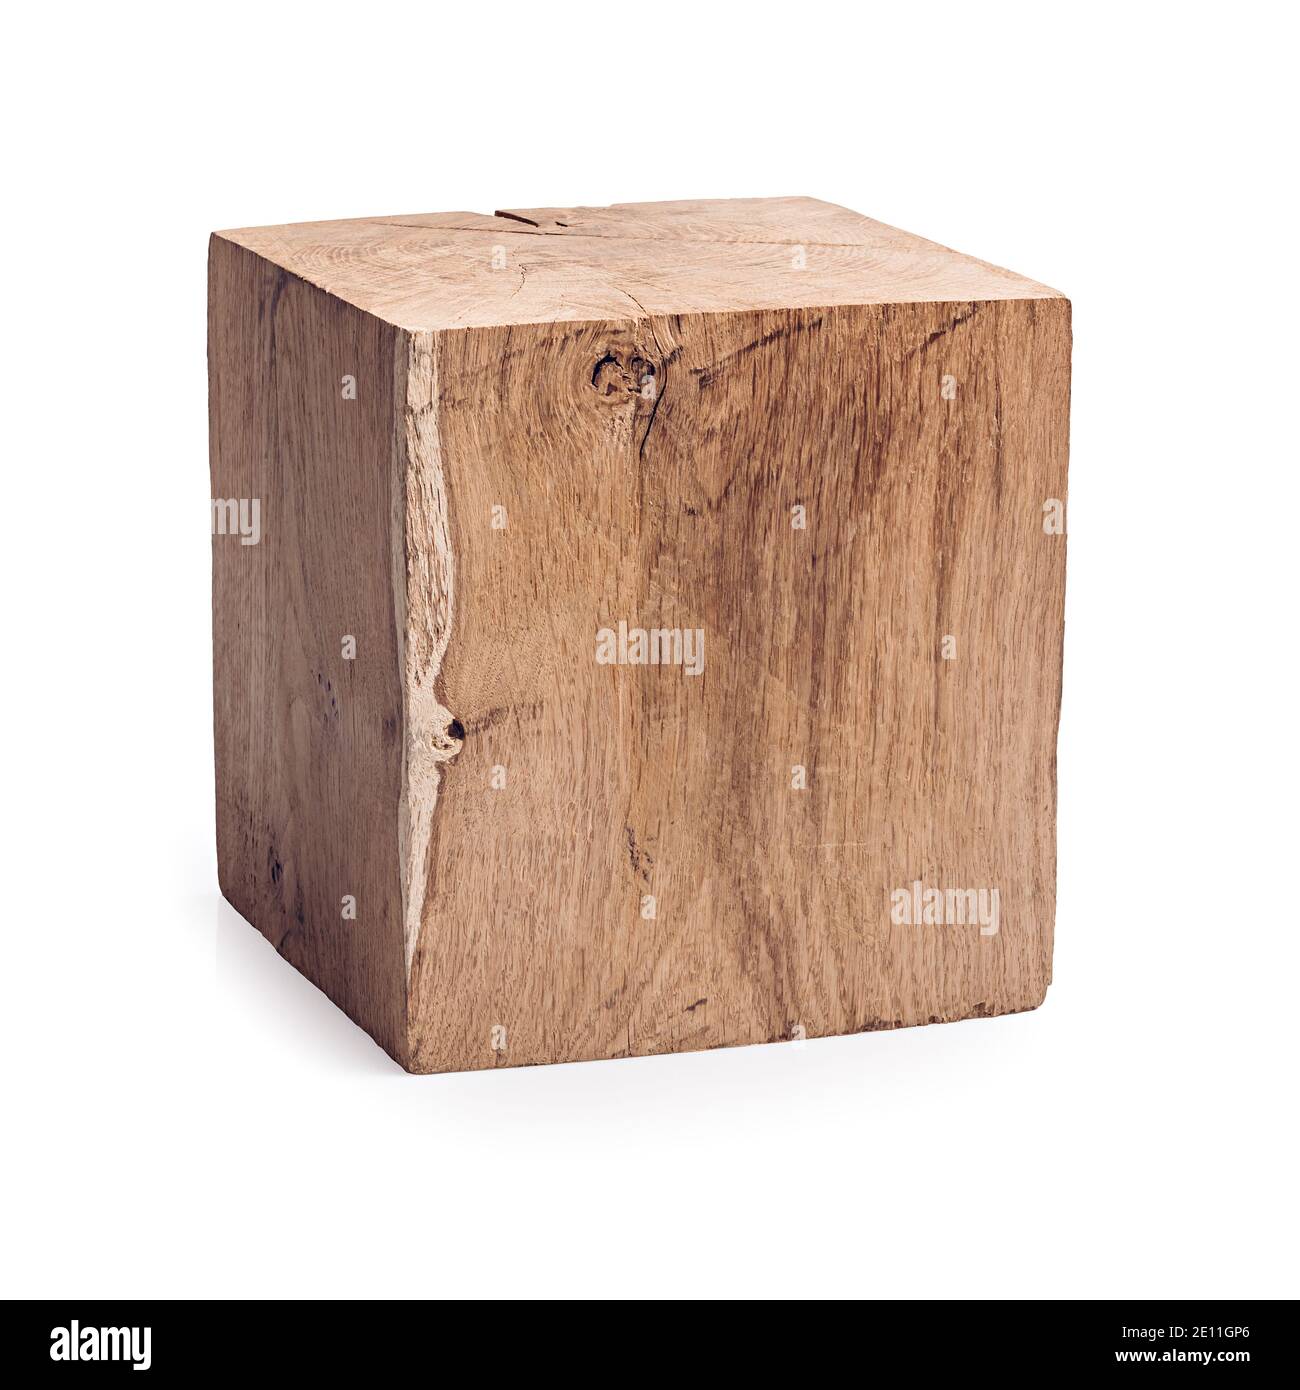 20 cm solid oak cube isolated on white. Interior design wood decor Stock Photo